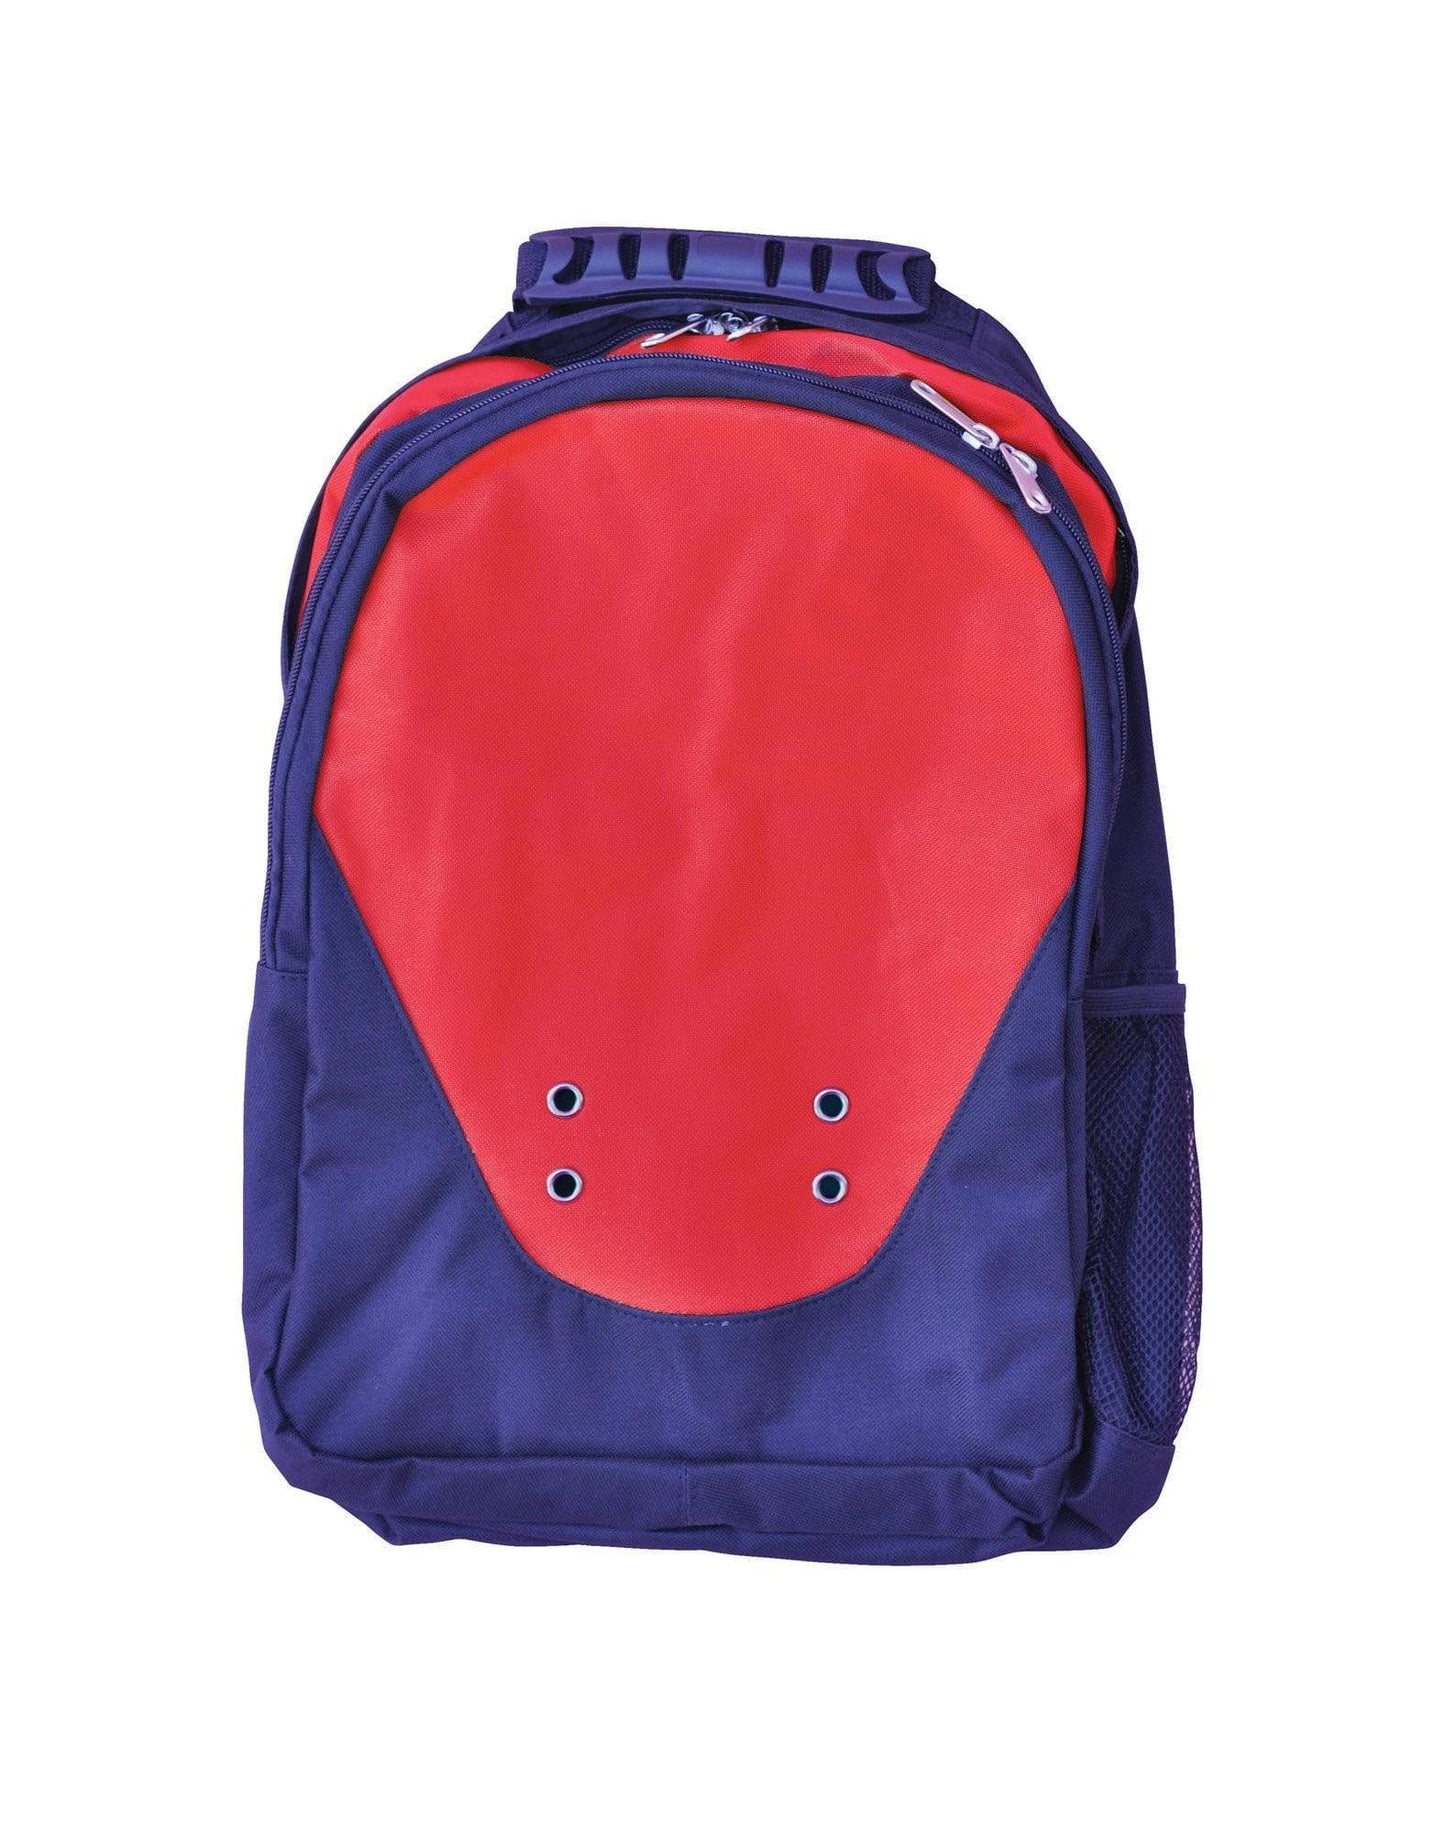 Climber Backpack B5001 Active Wear Winning Spirit Navy/Red "(w)33cm x (h)42cm x (d)17.5cm, Capacity 24.3 Litres" 